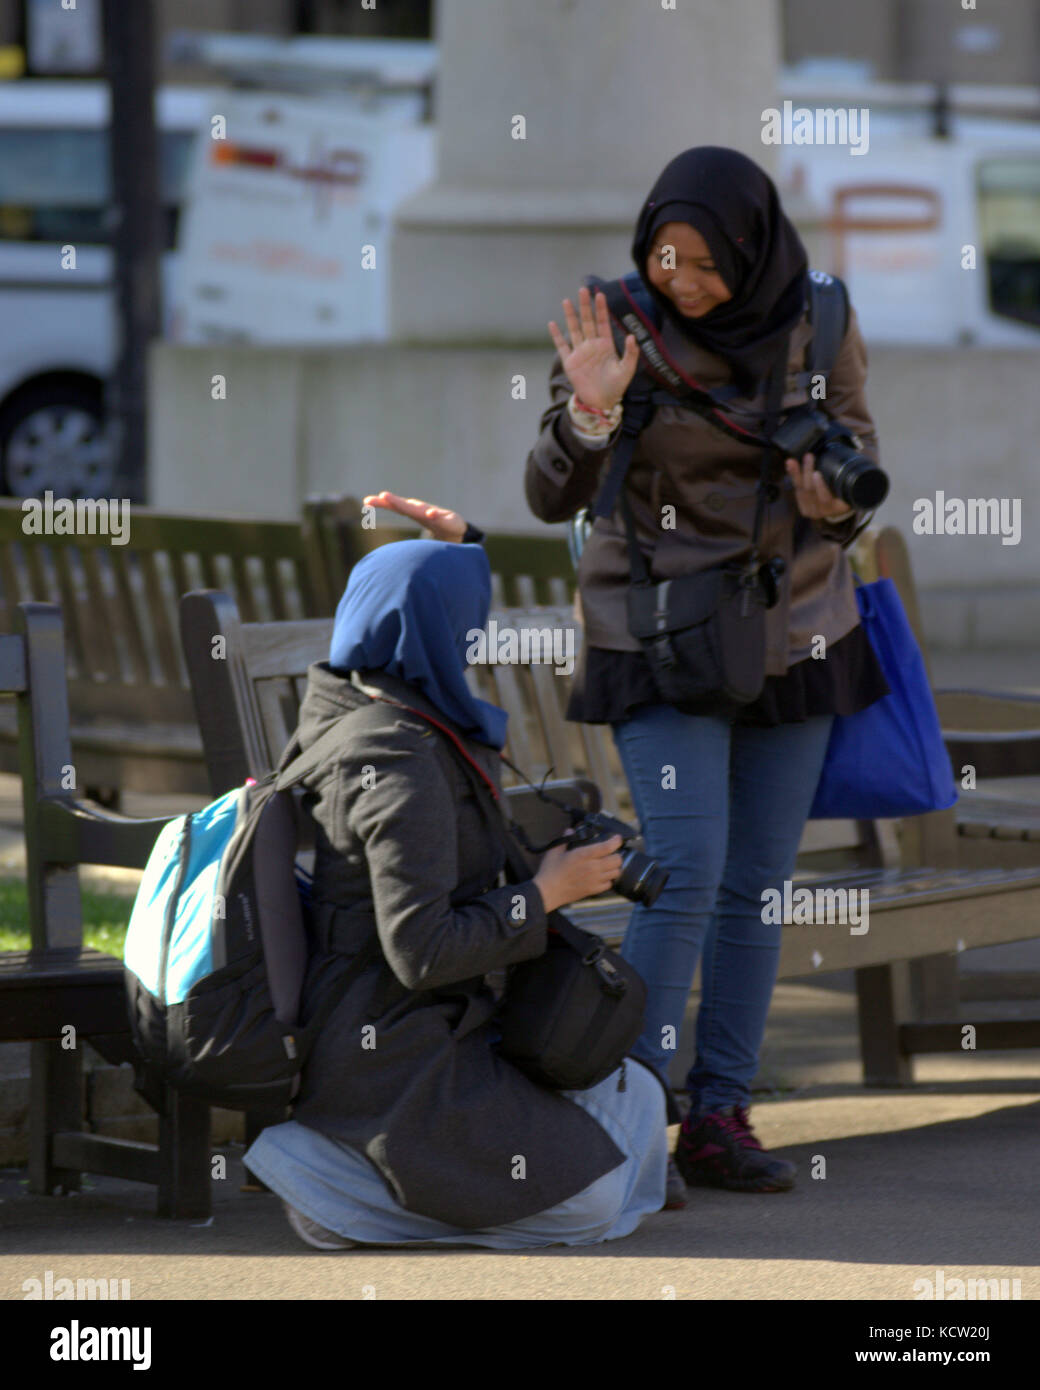 George square Glasgow tourists Asian girl hijab scarf high five Stock Photo